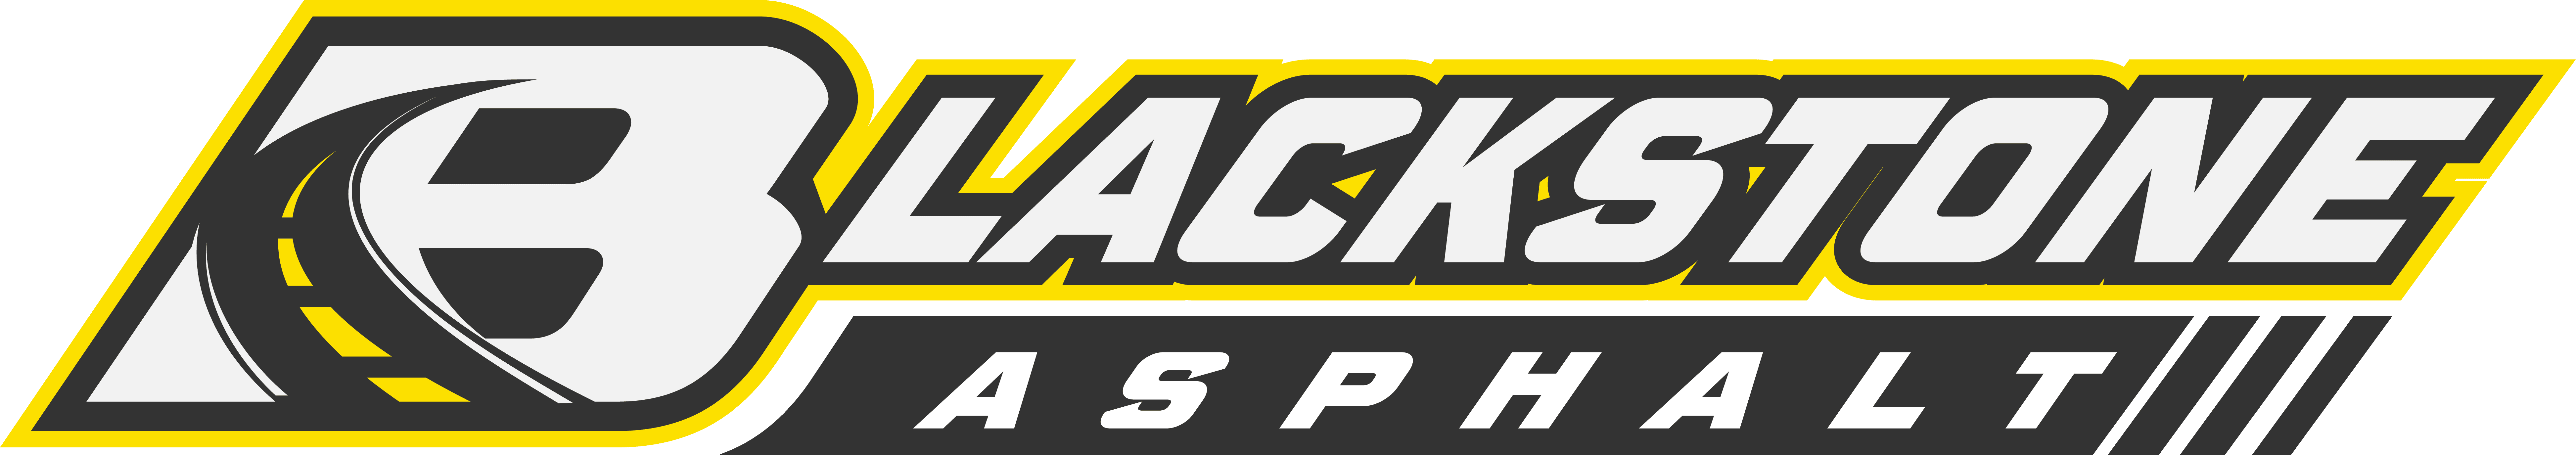 Blackstone Valley Asphalt Logo